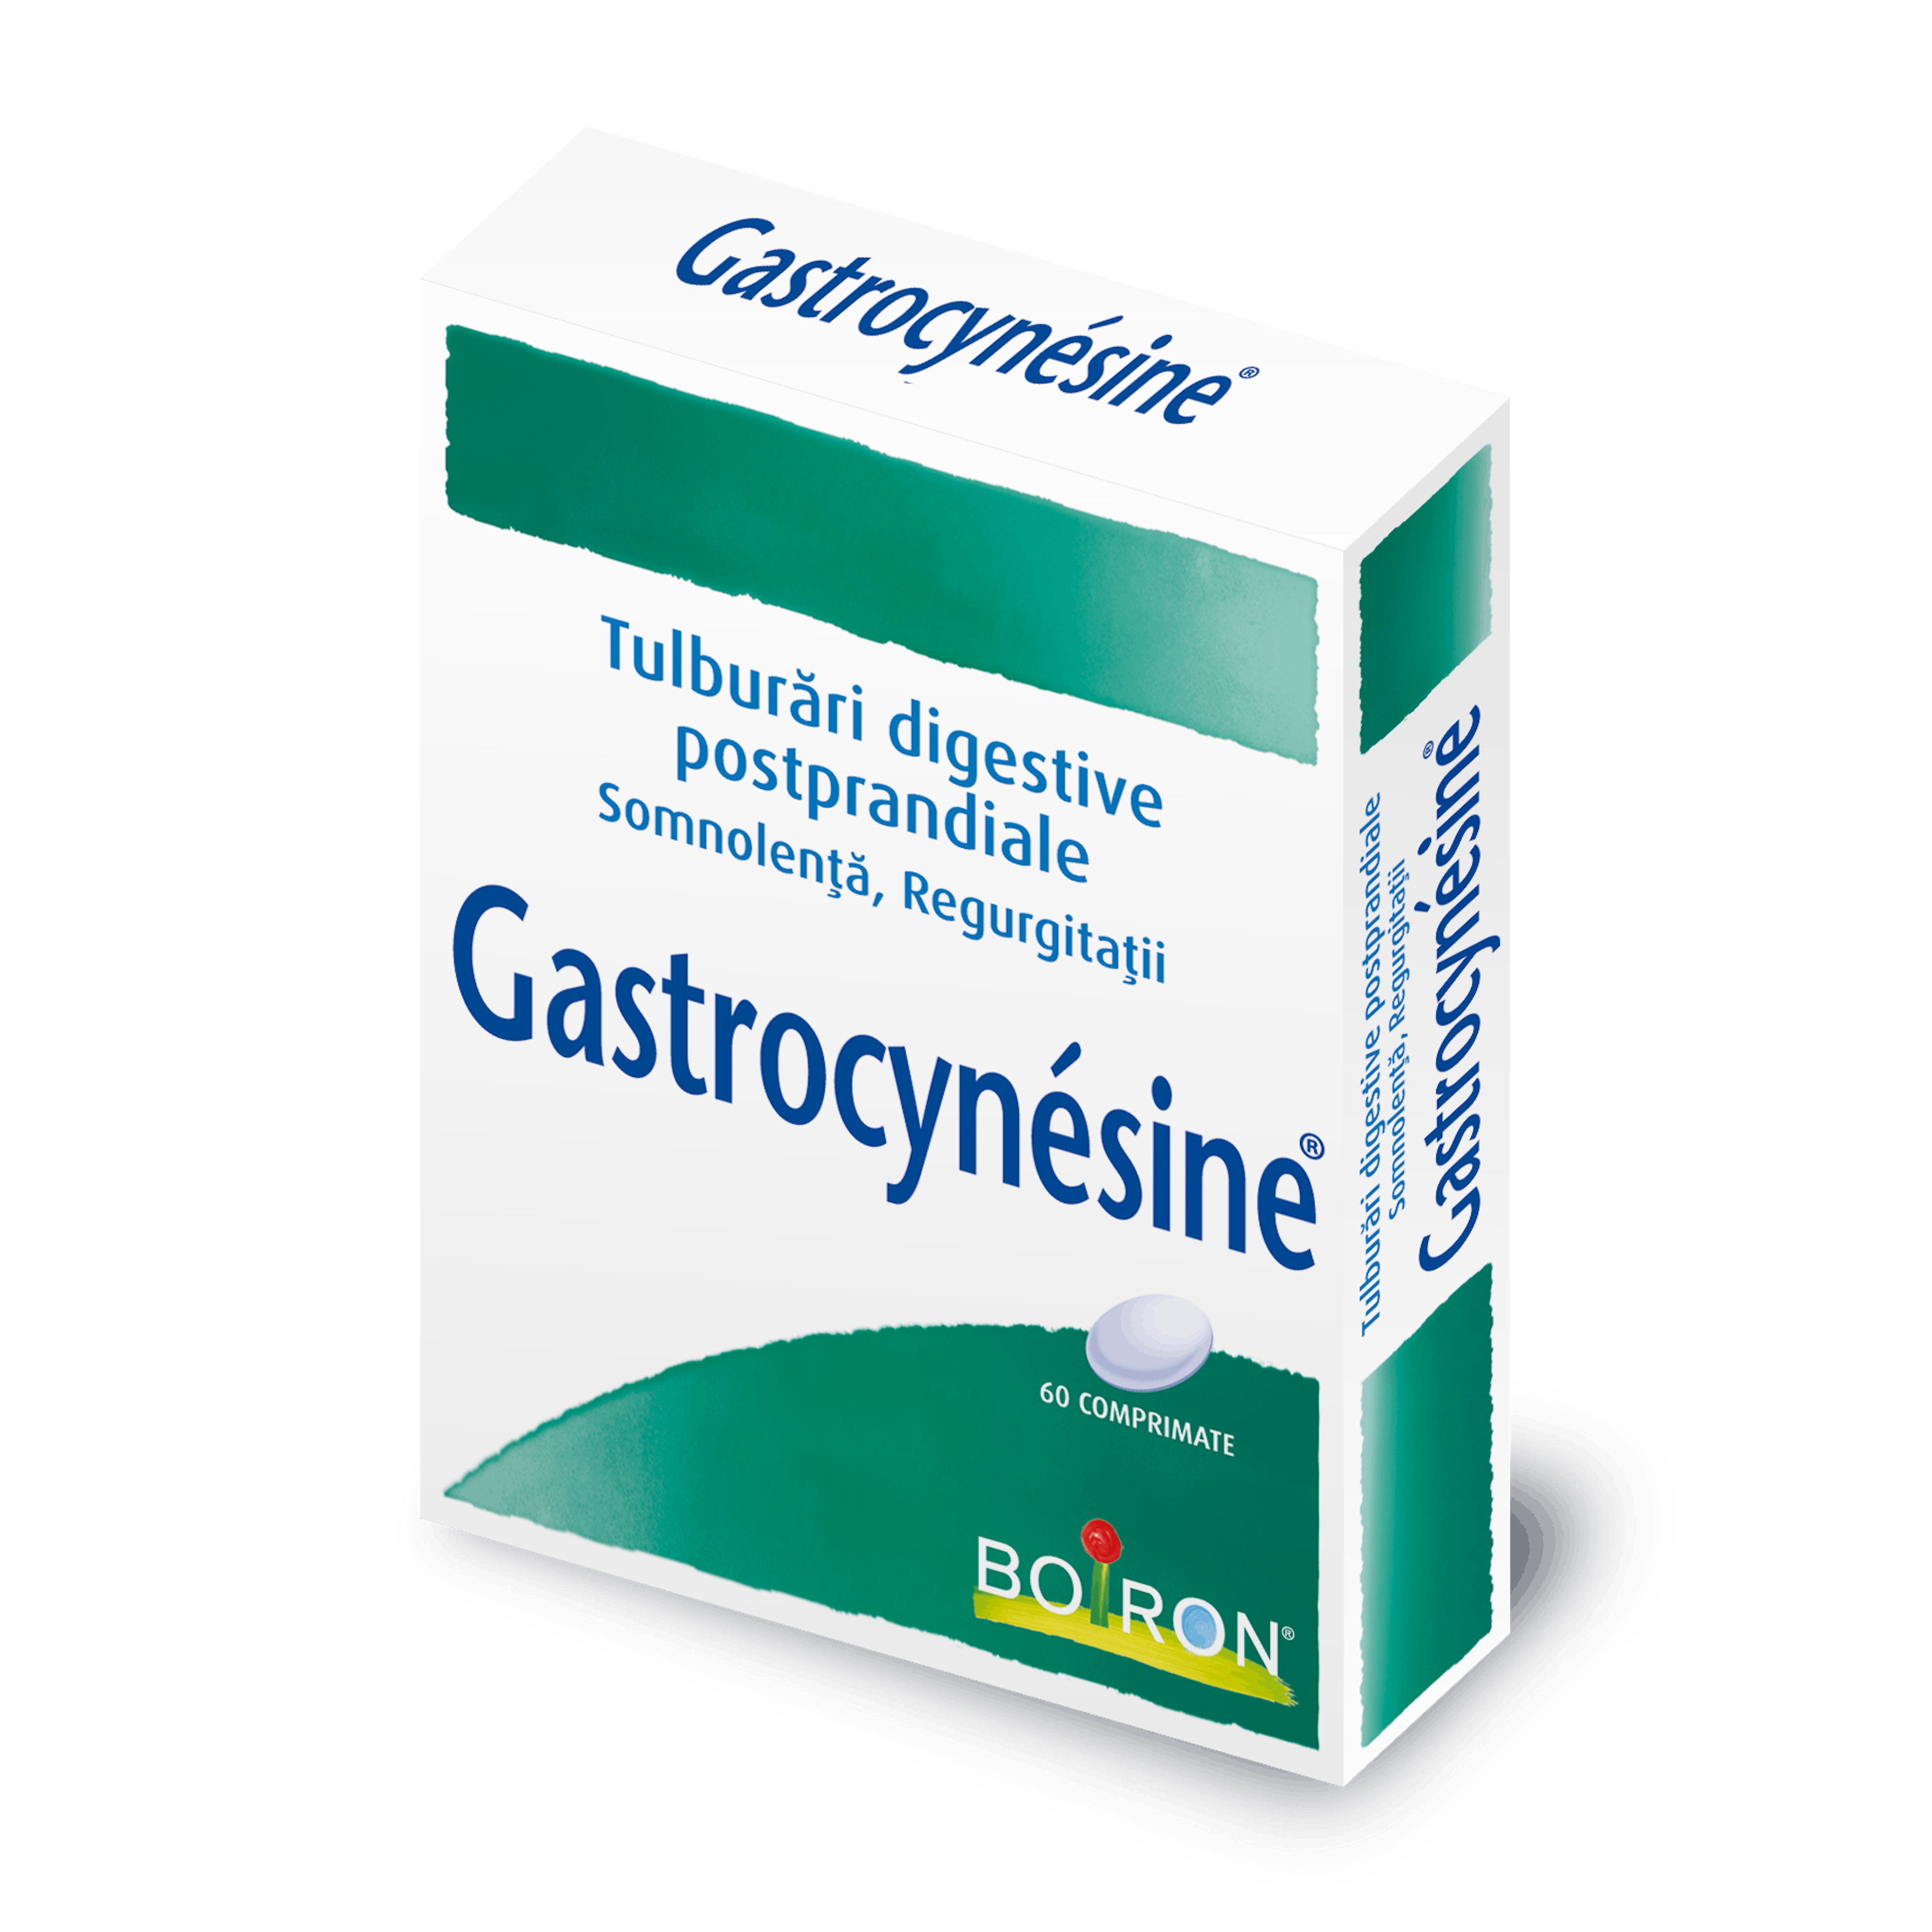 Gastrocynesine